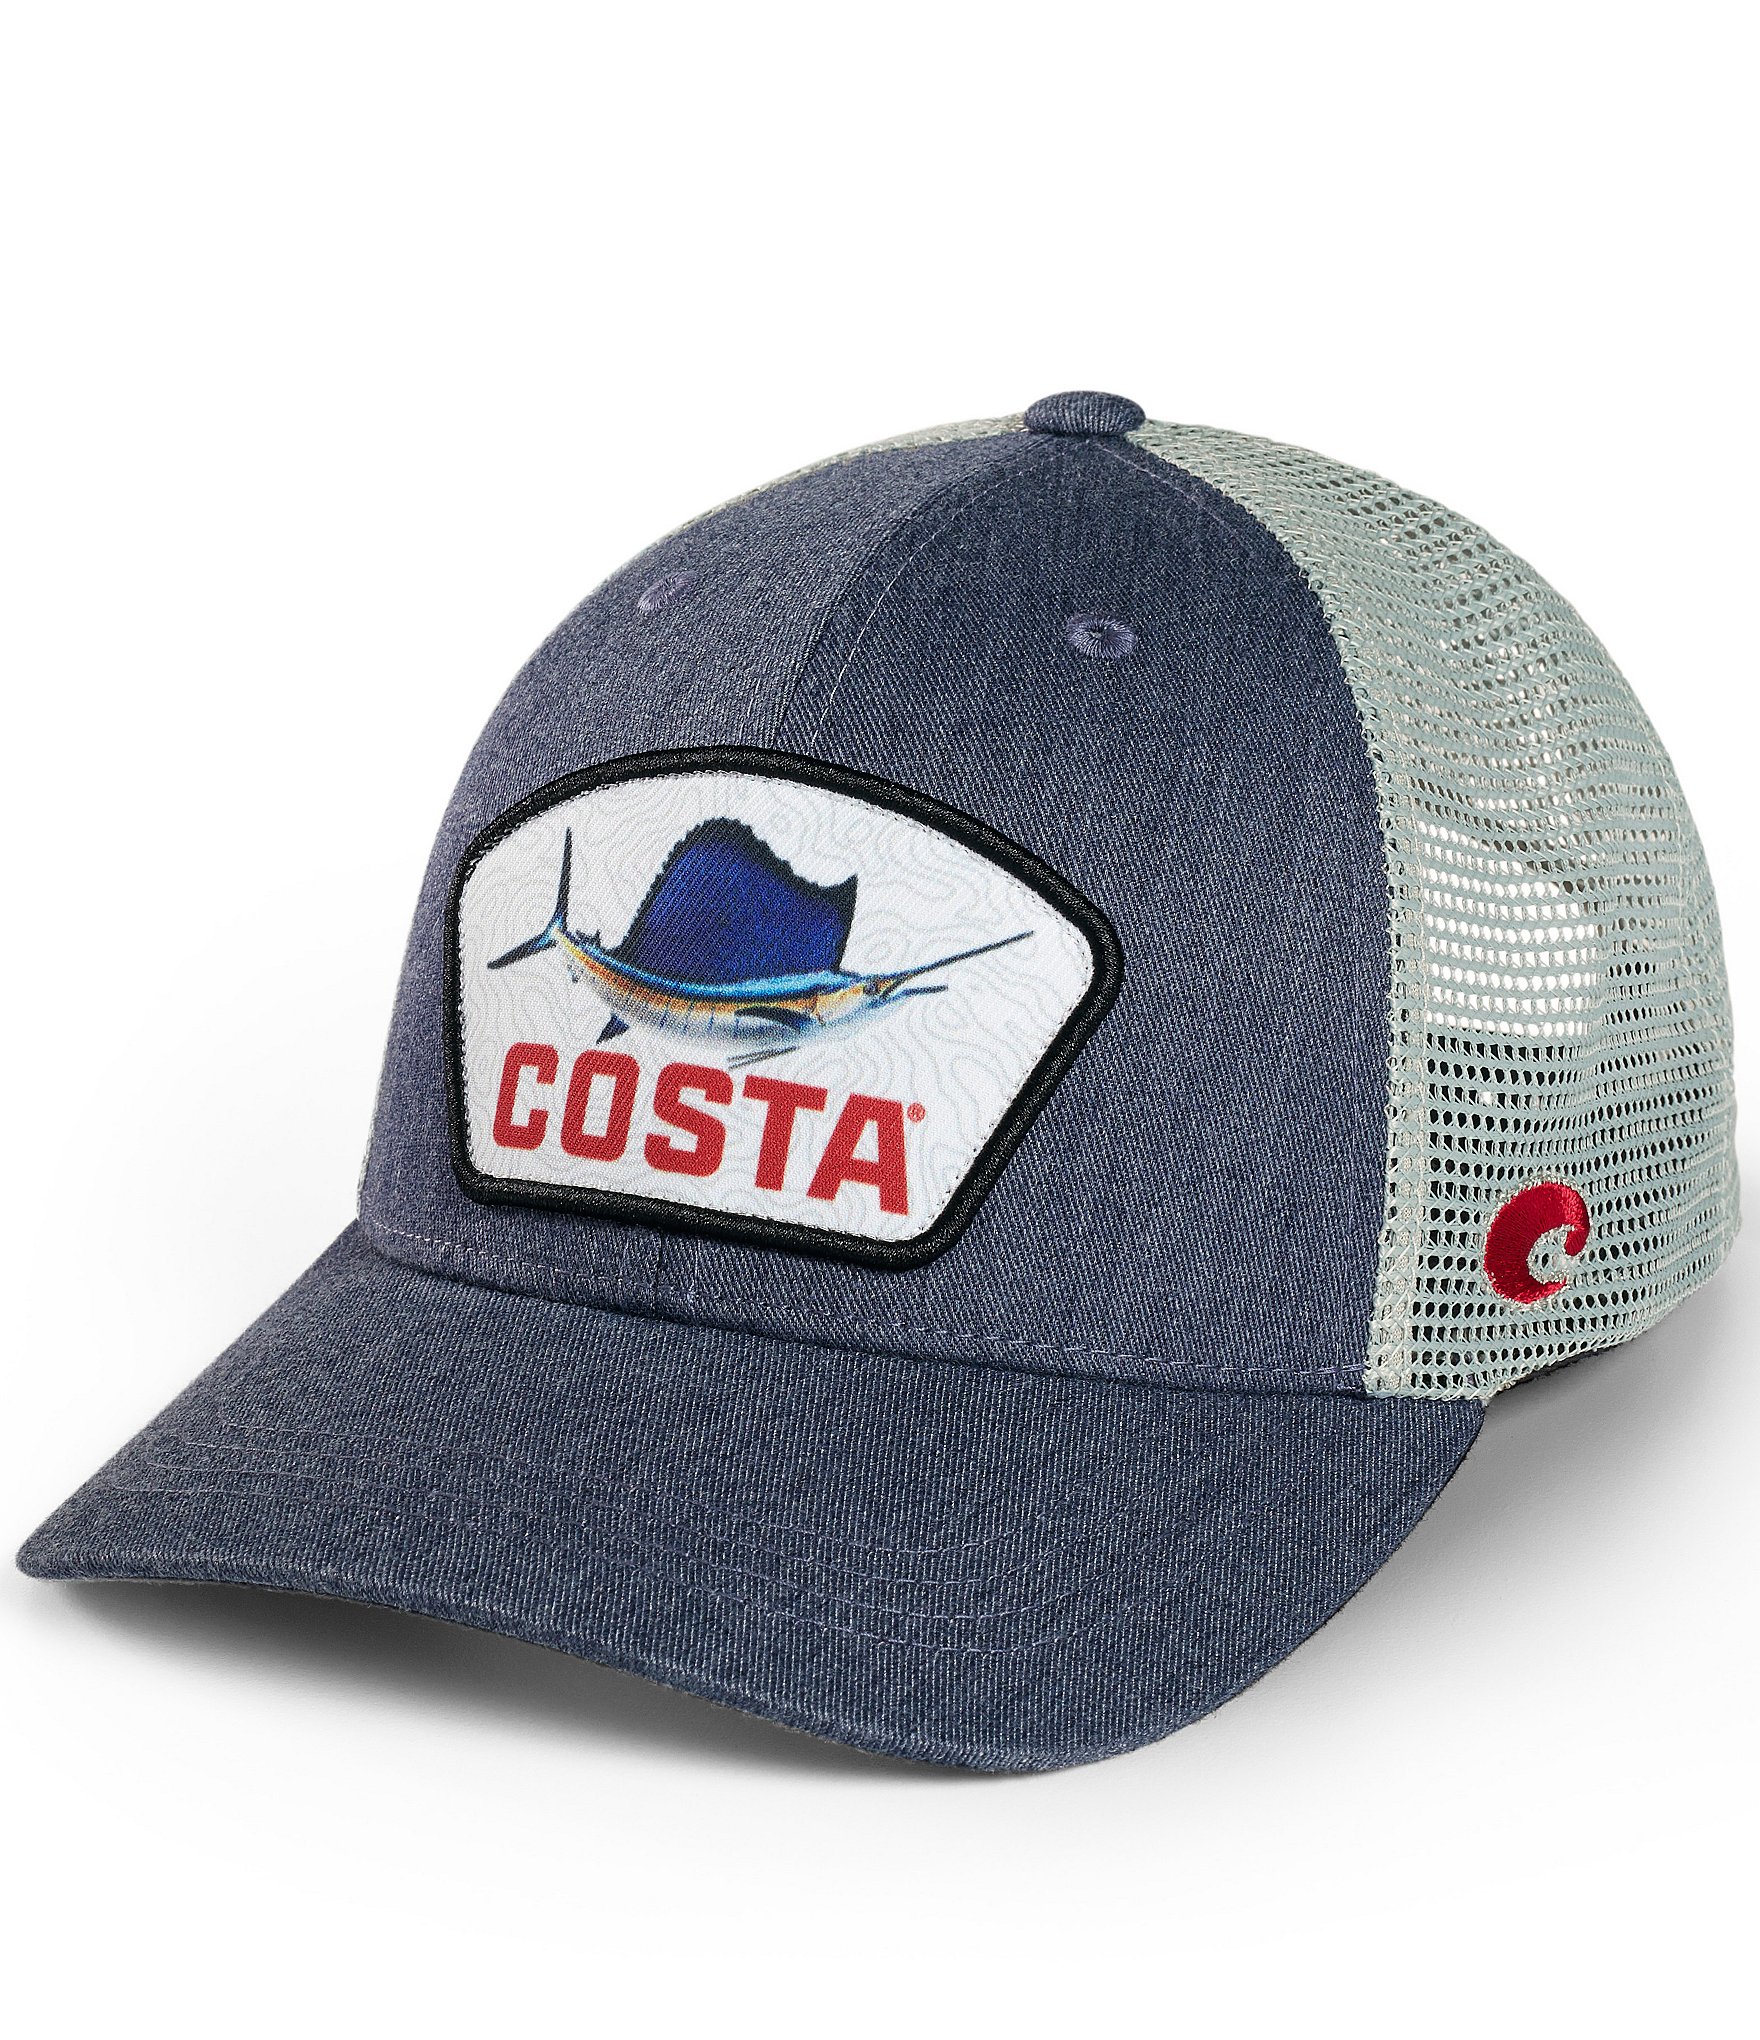 Costa Topwater Twill Trucker Hat Tan – Capt. Harry's Fishing Supply